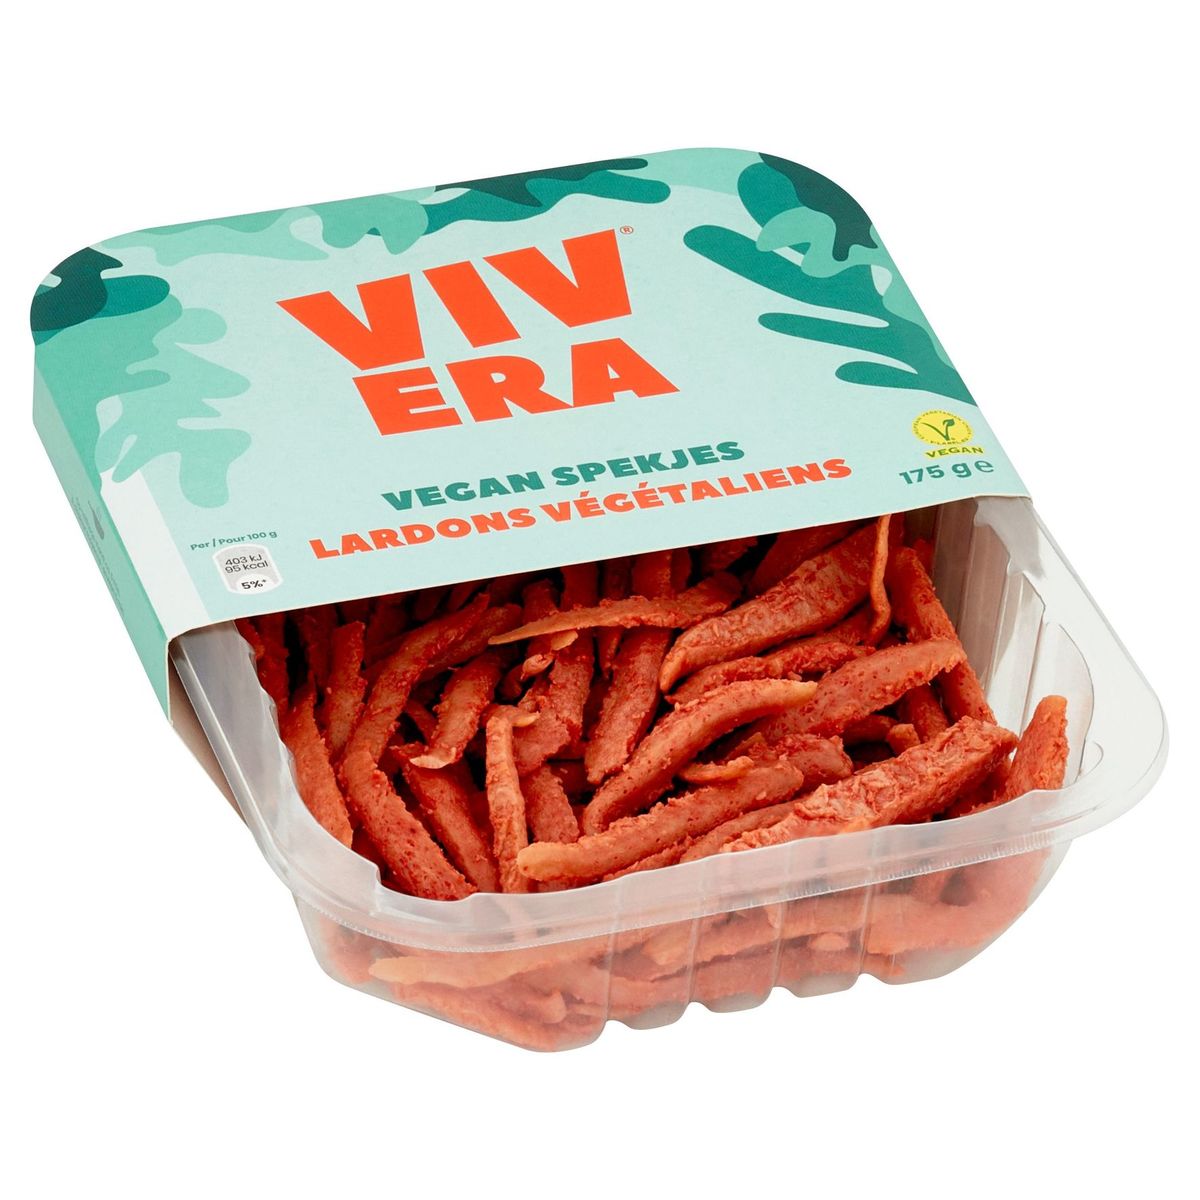 Vivera Vegan Spekjes 175 g